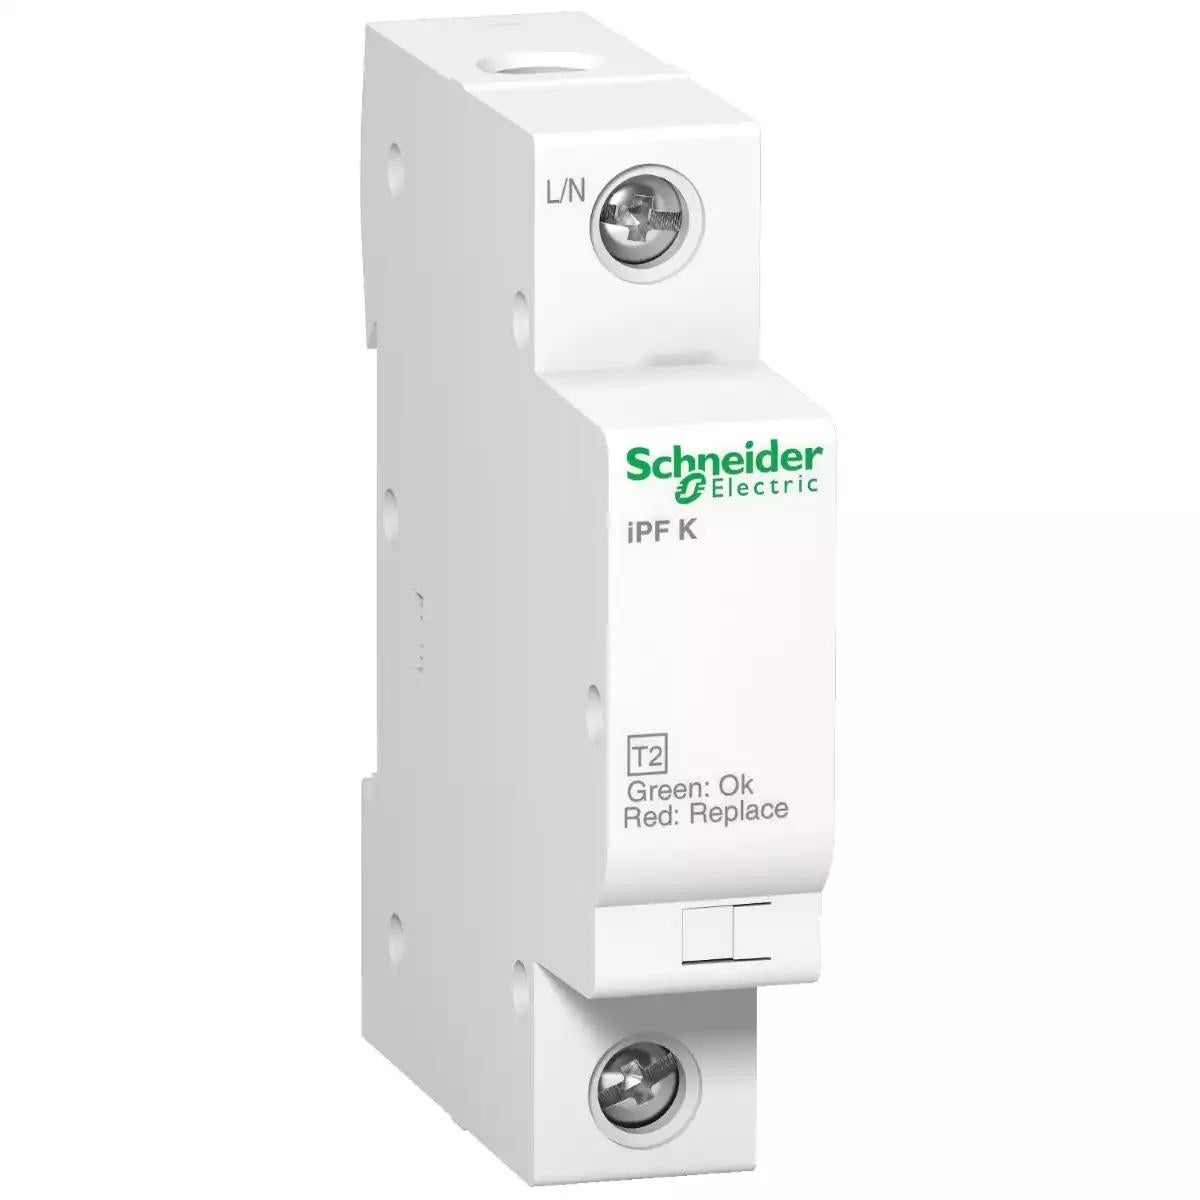 Schneider Electric Acti 9 iPF K 20 modular surge arrester - 1 pole - 340V